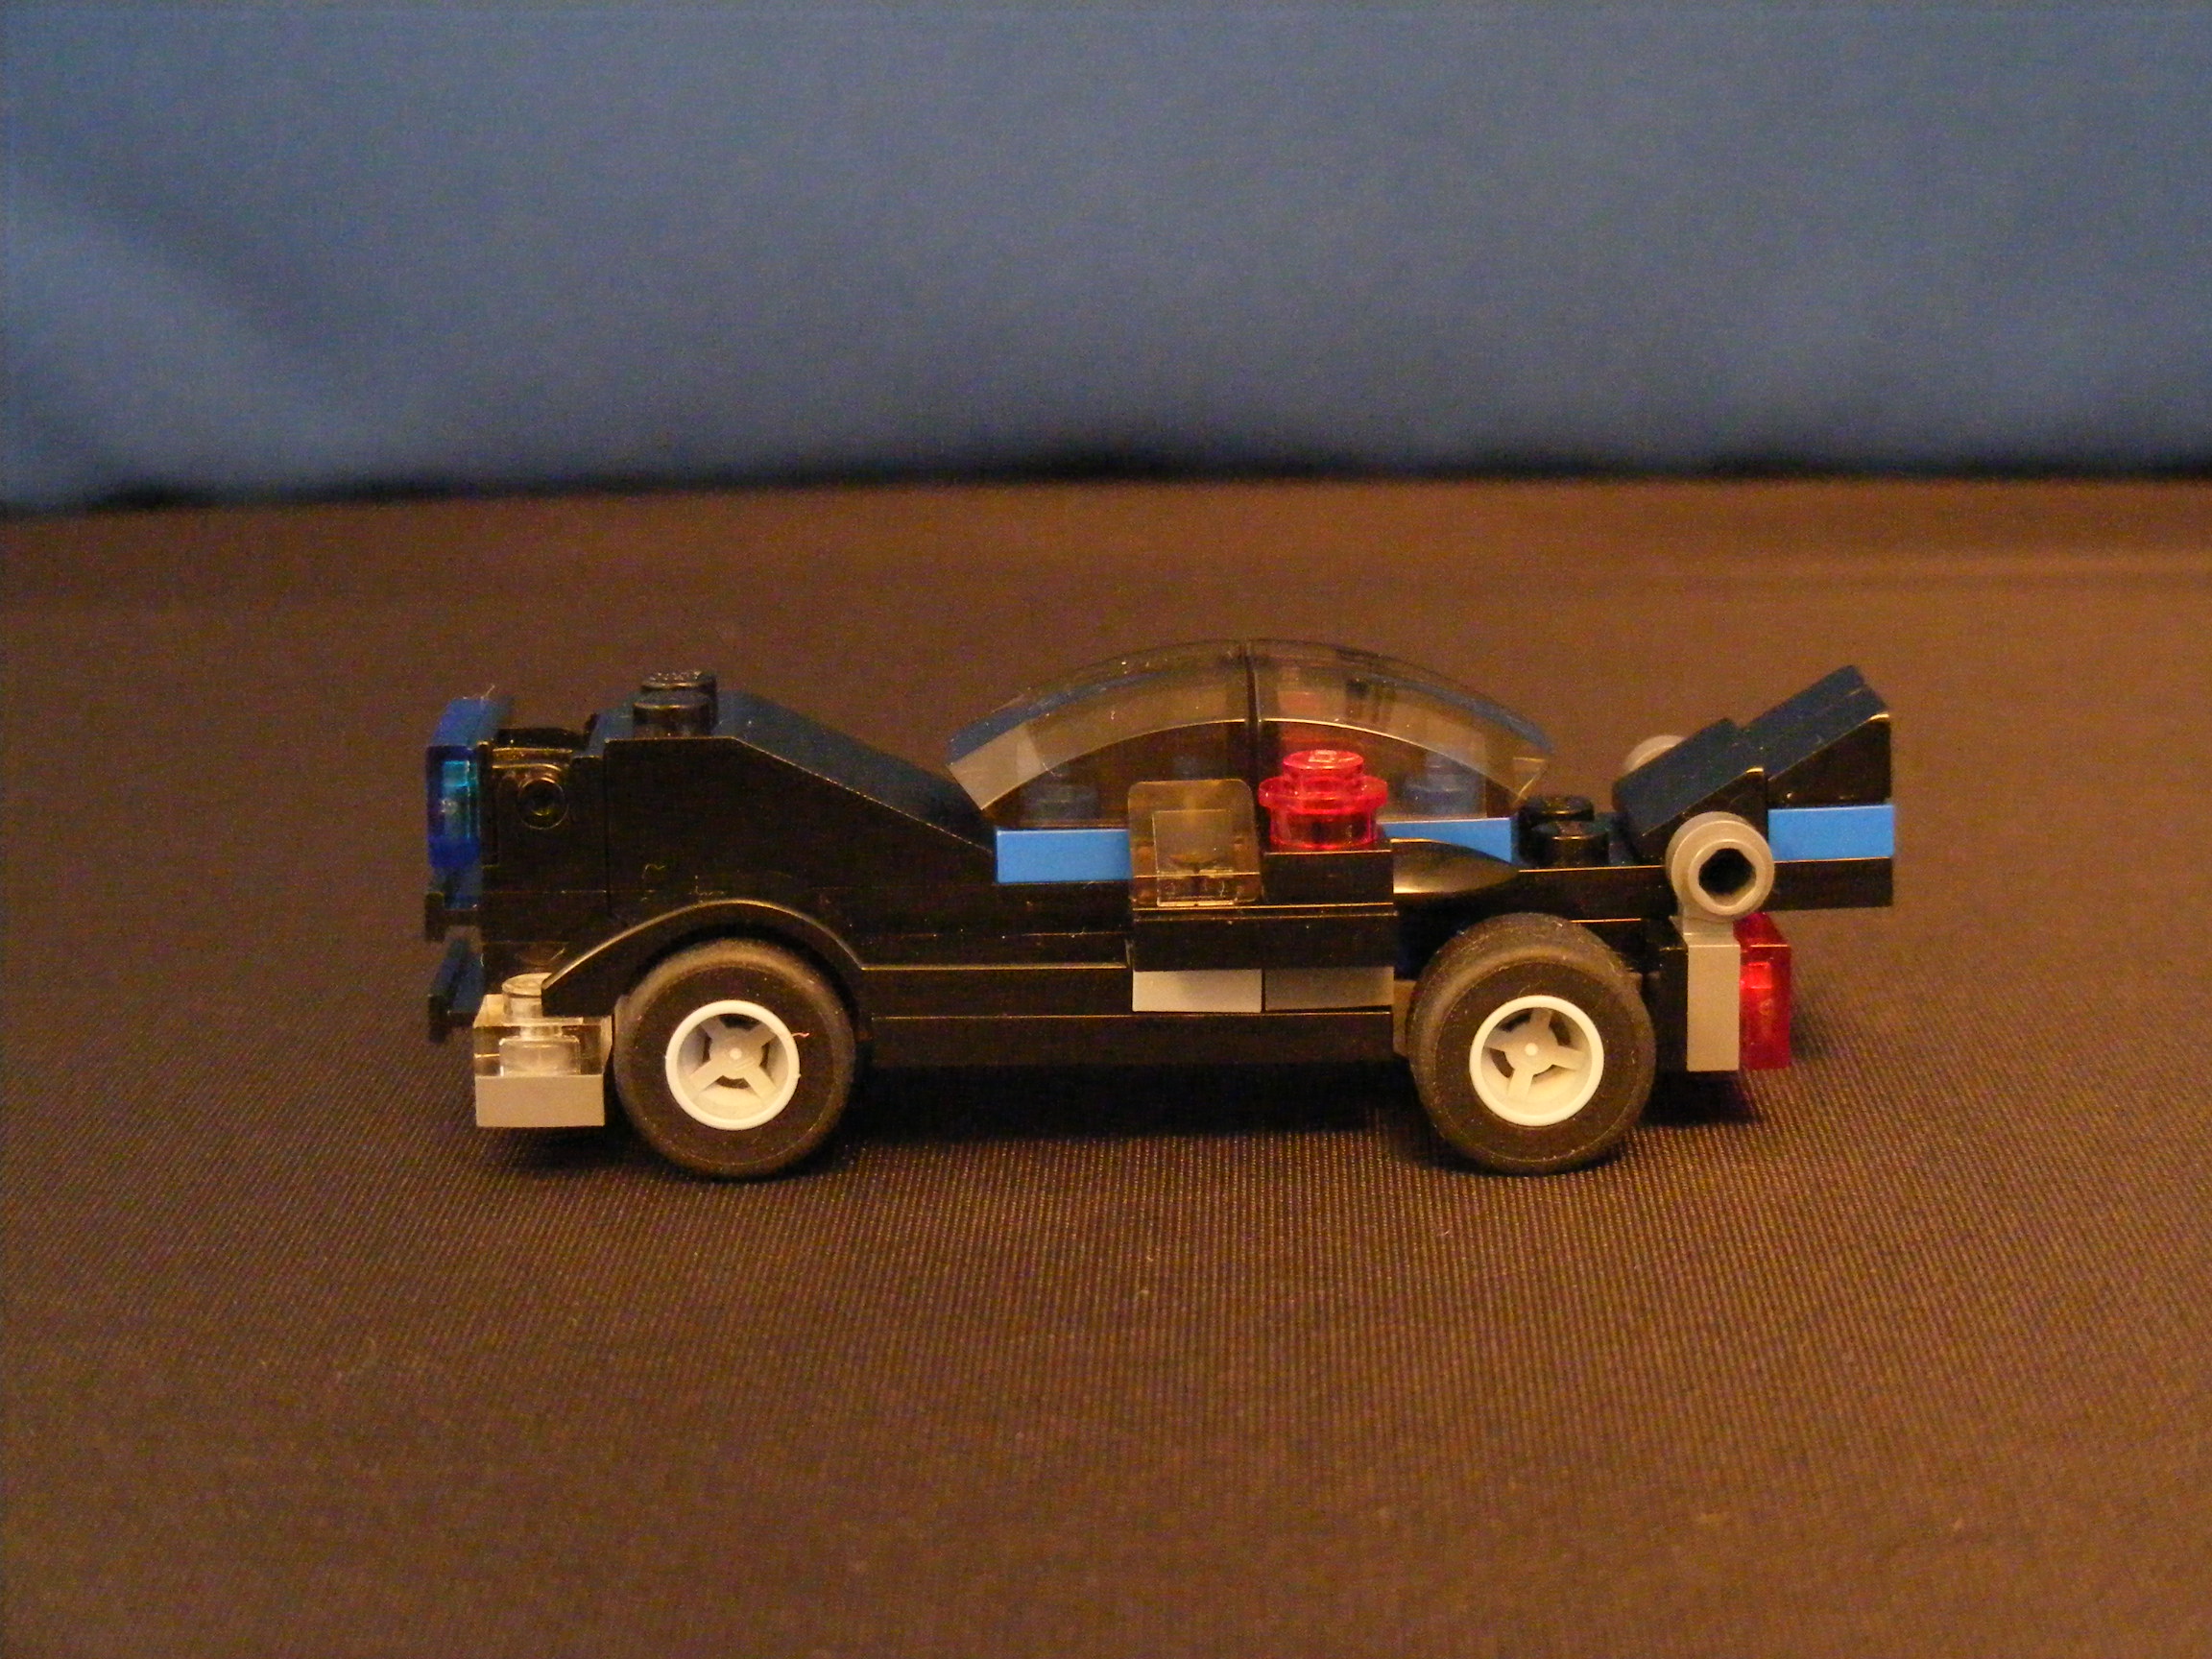 http://www.brickshelf.com/gallery/ZoefDeHaas/Batman/Vehicles/mini_batmobile_001.jpg